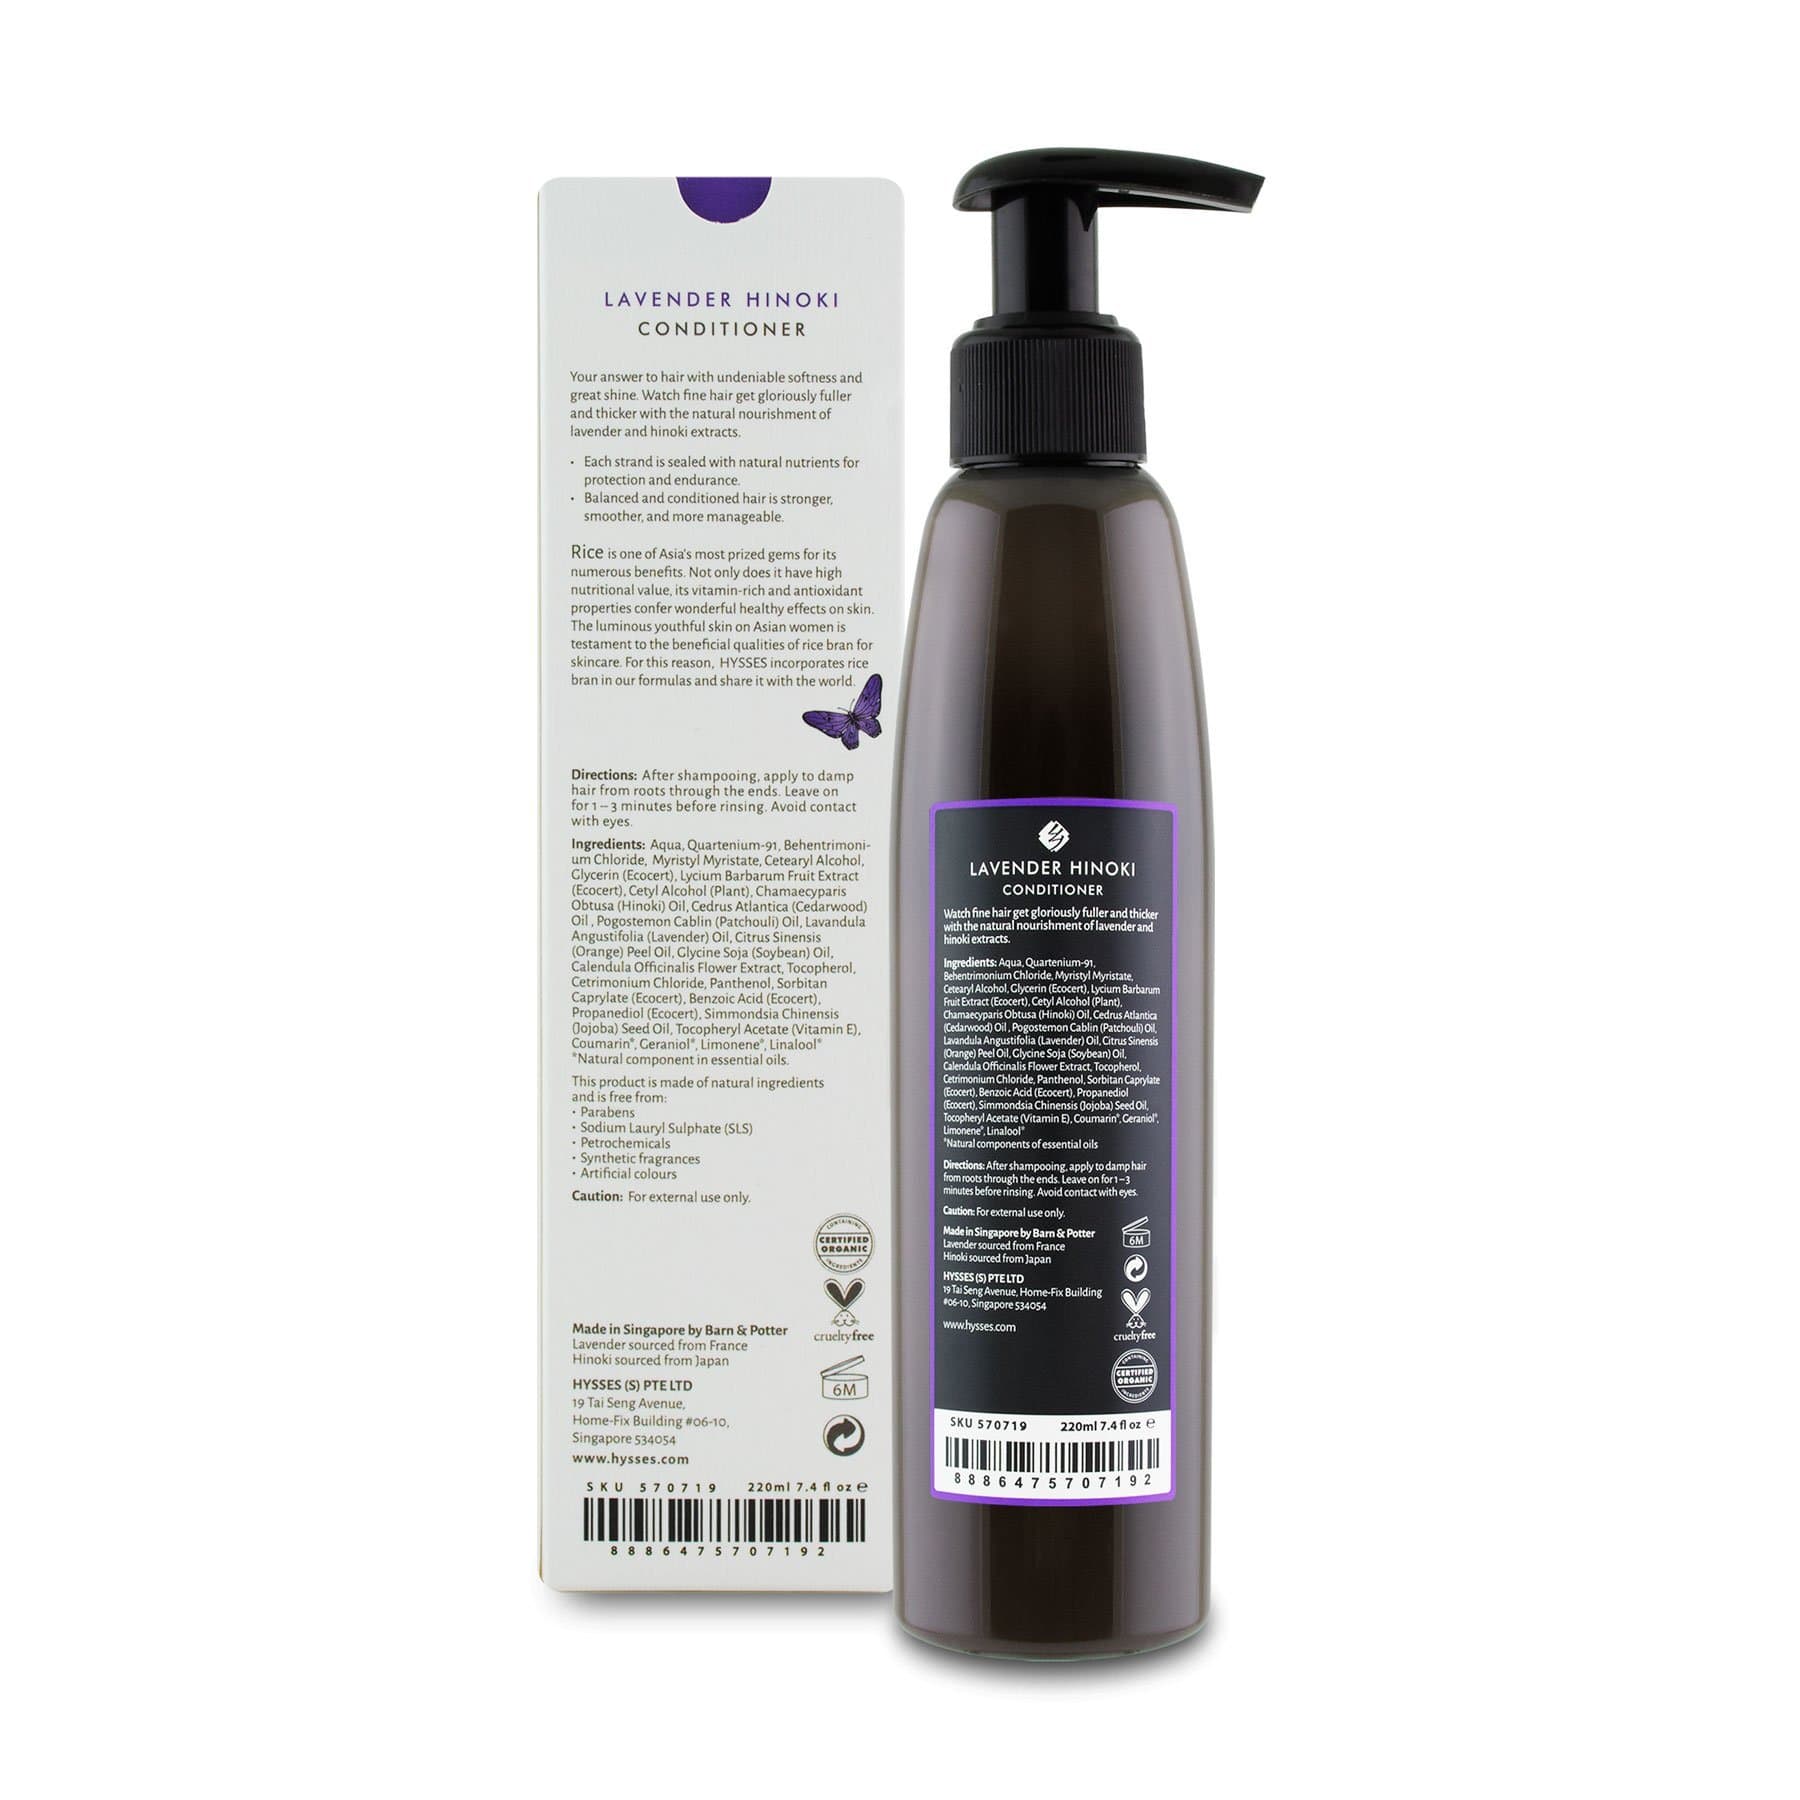 Hysses Hair Care Conditioner Lavender Hinoki, 220ml